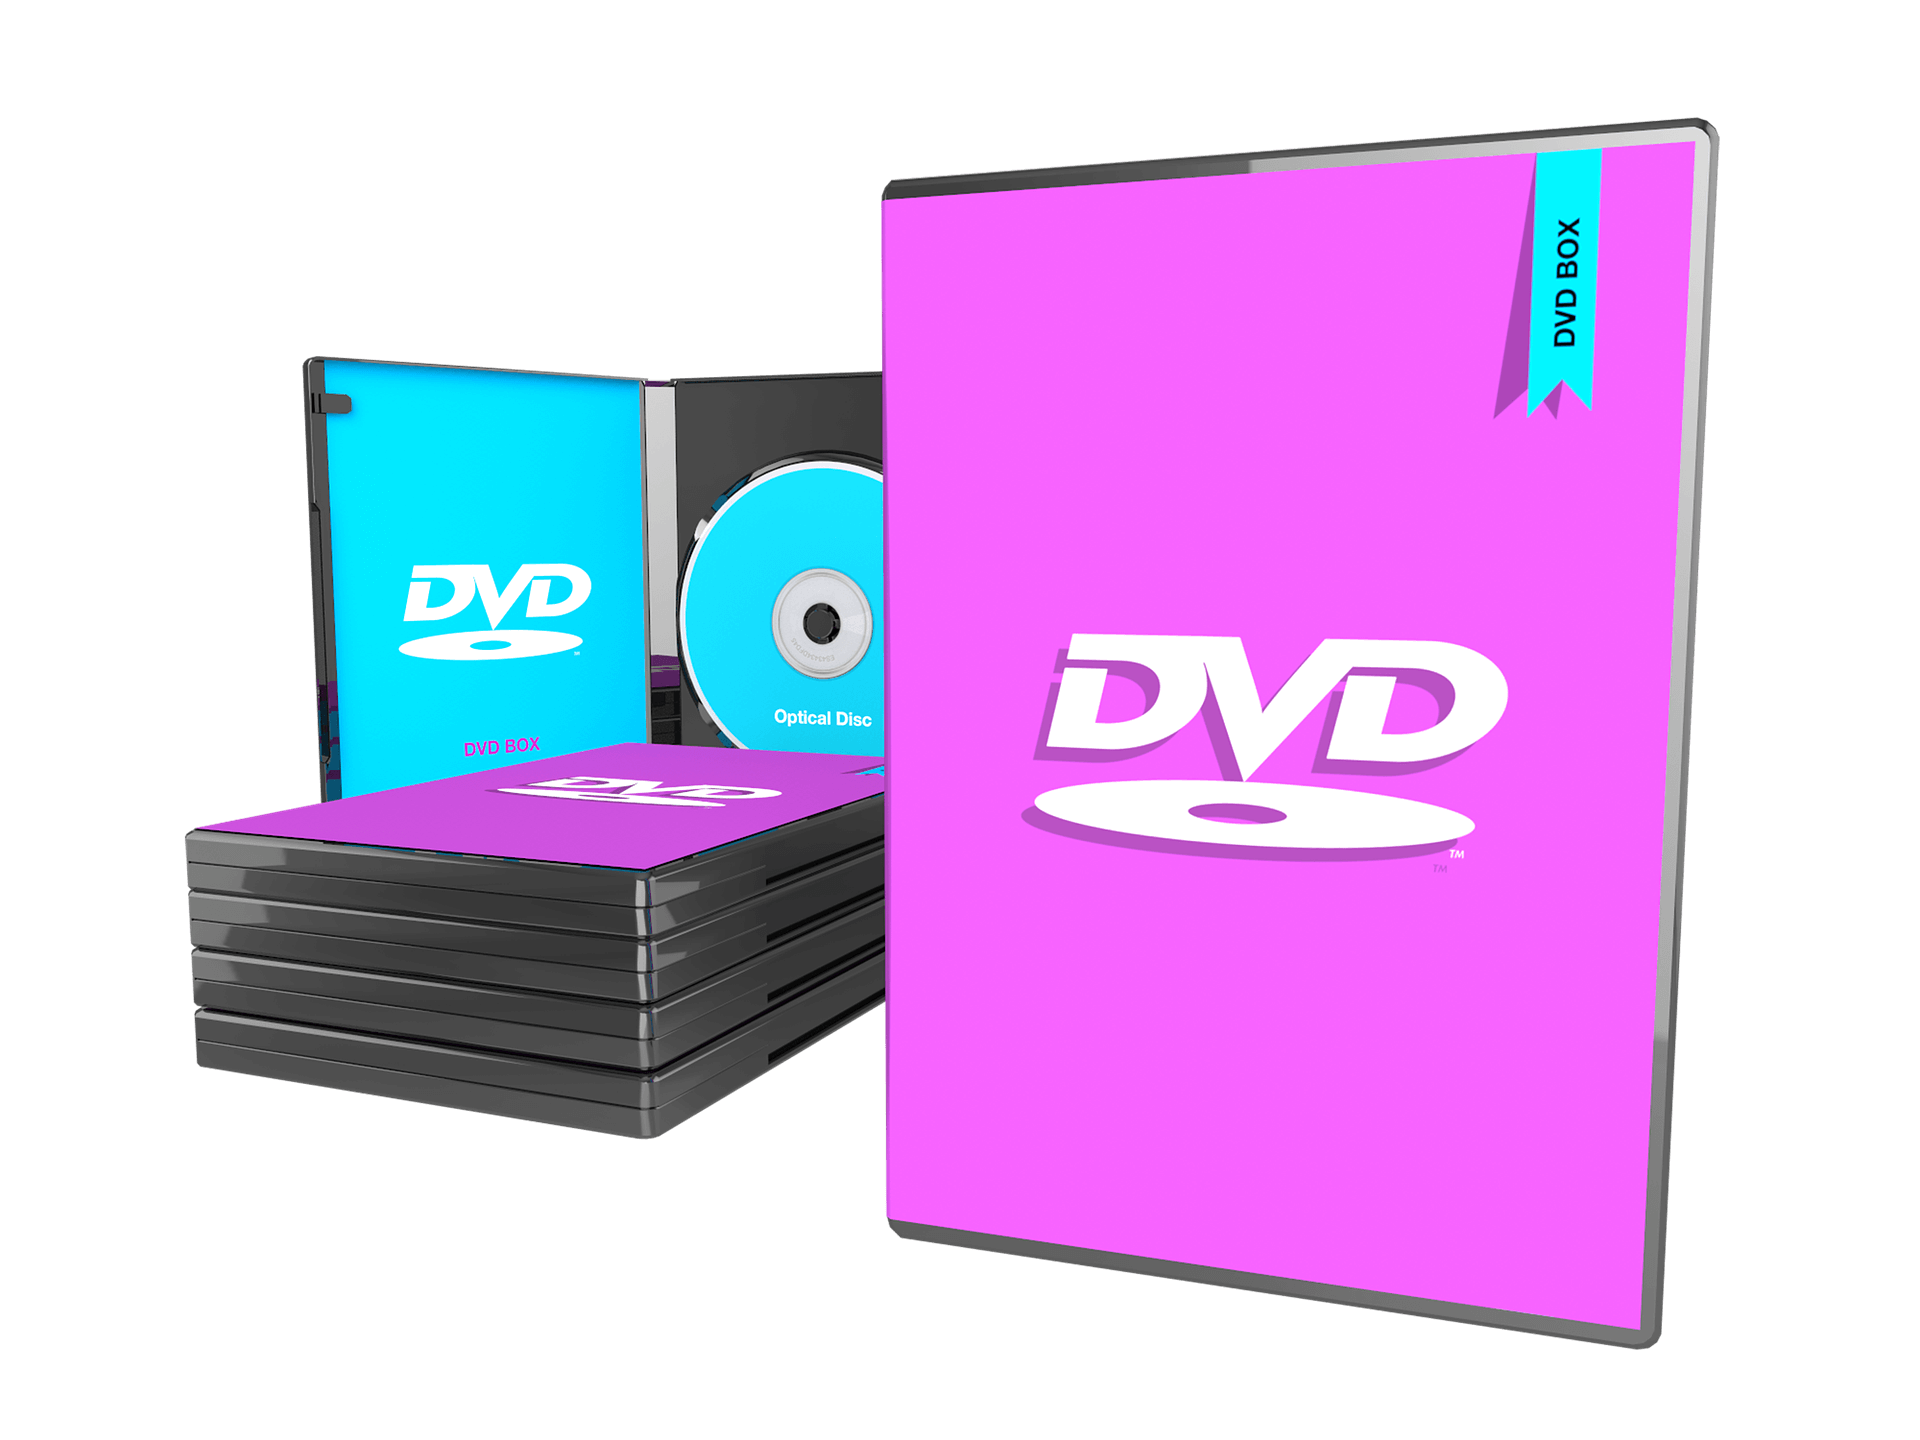 Grabar una imagen ISO en un DVD